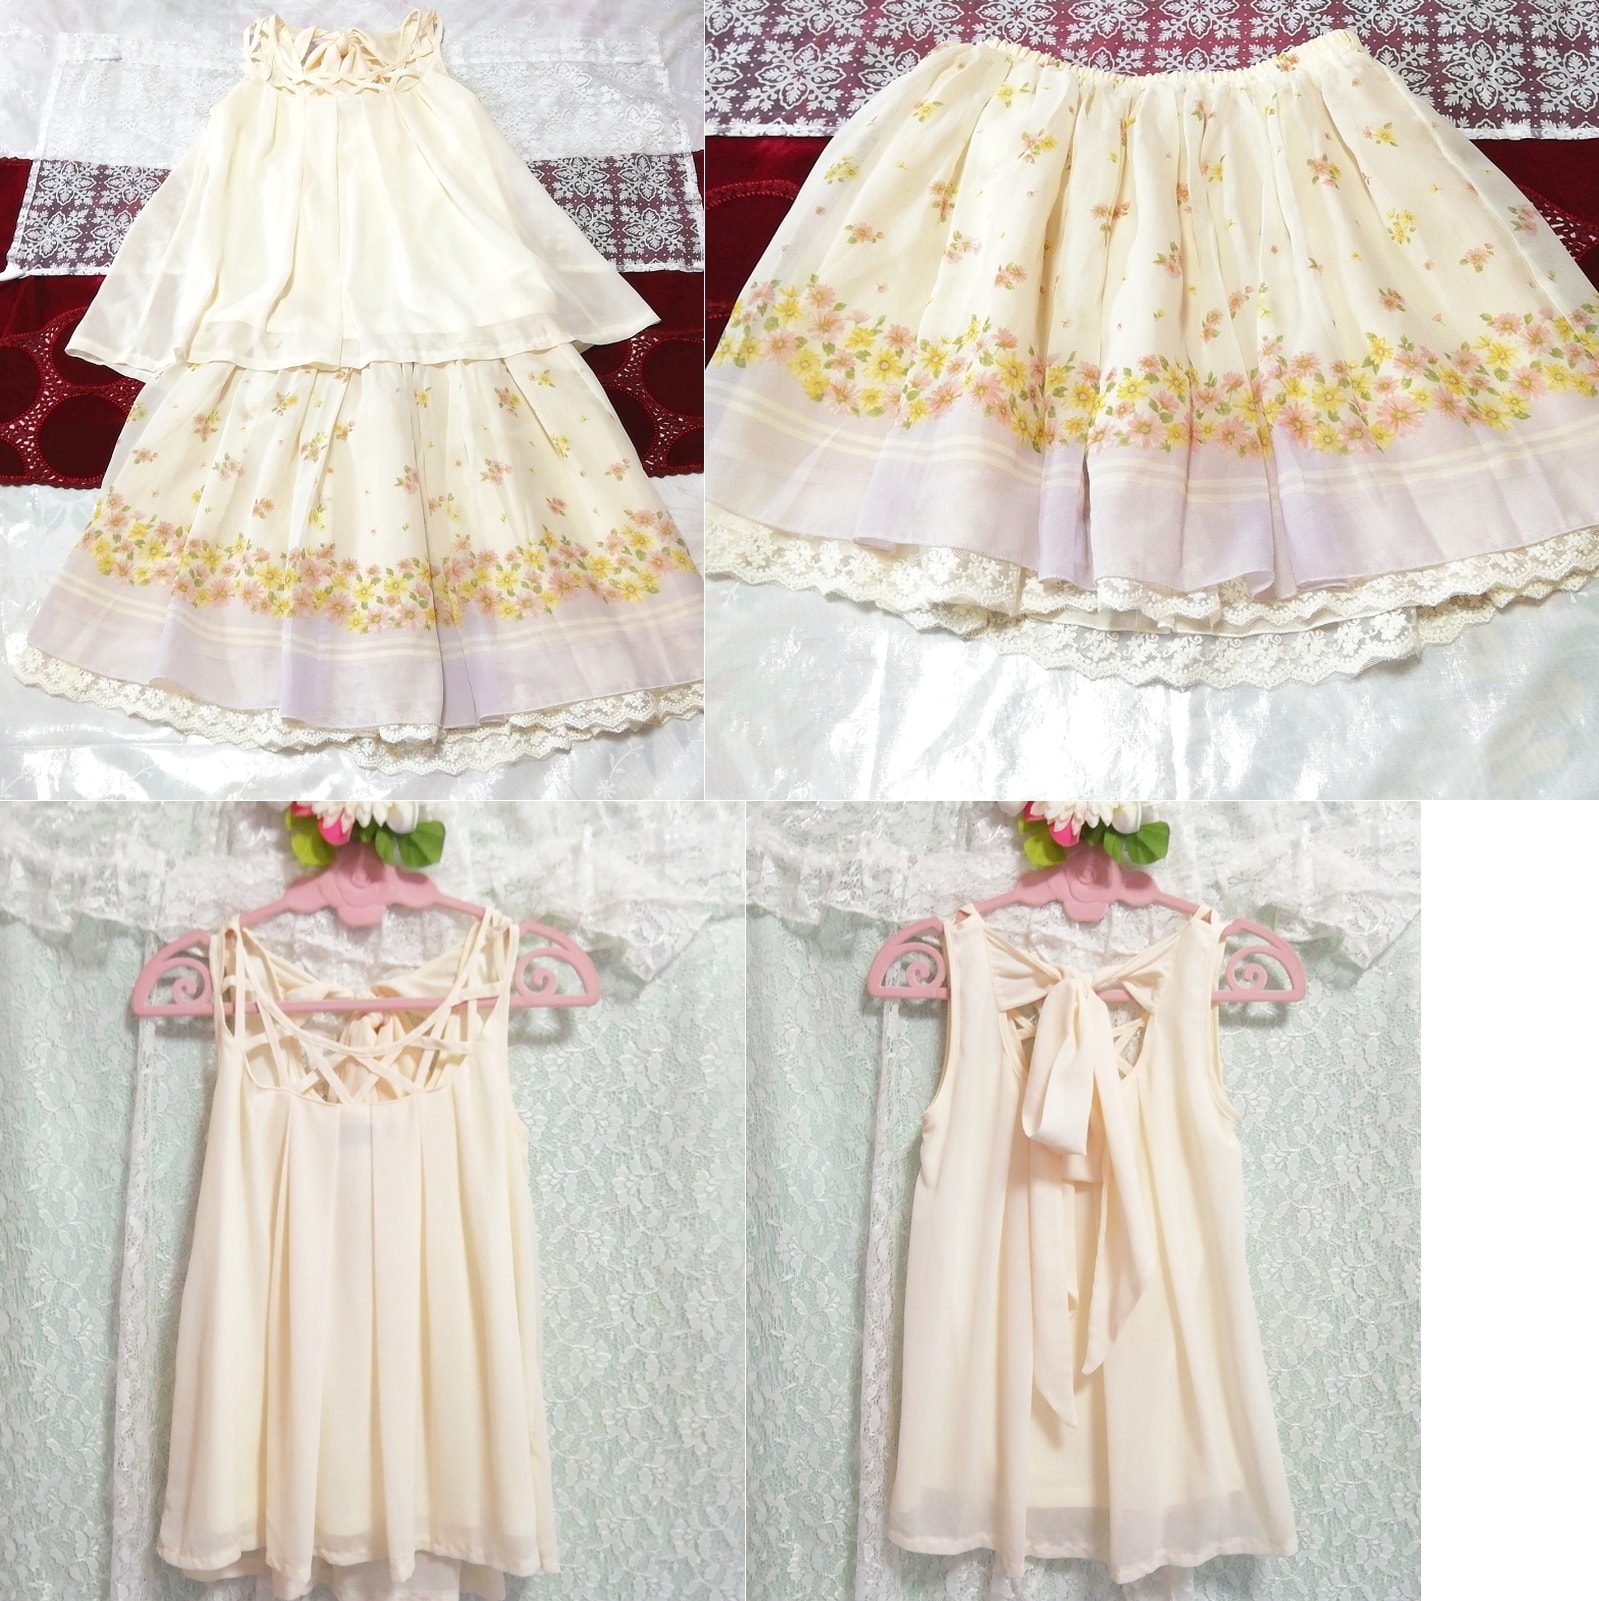 Floral white chiffon tunic negligee nightgown nightwear floral pattern skirt 2P, fashion, ladies' fashion, nightwear, pajamas